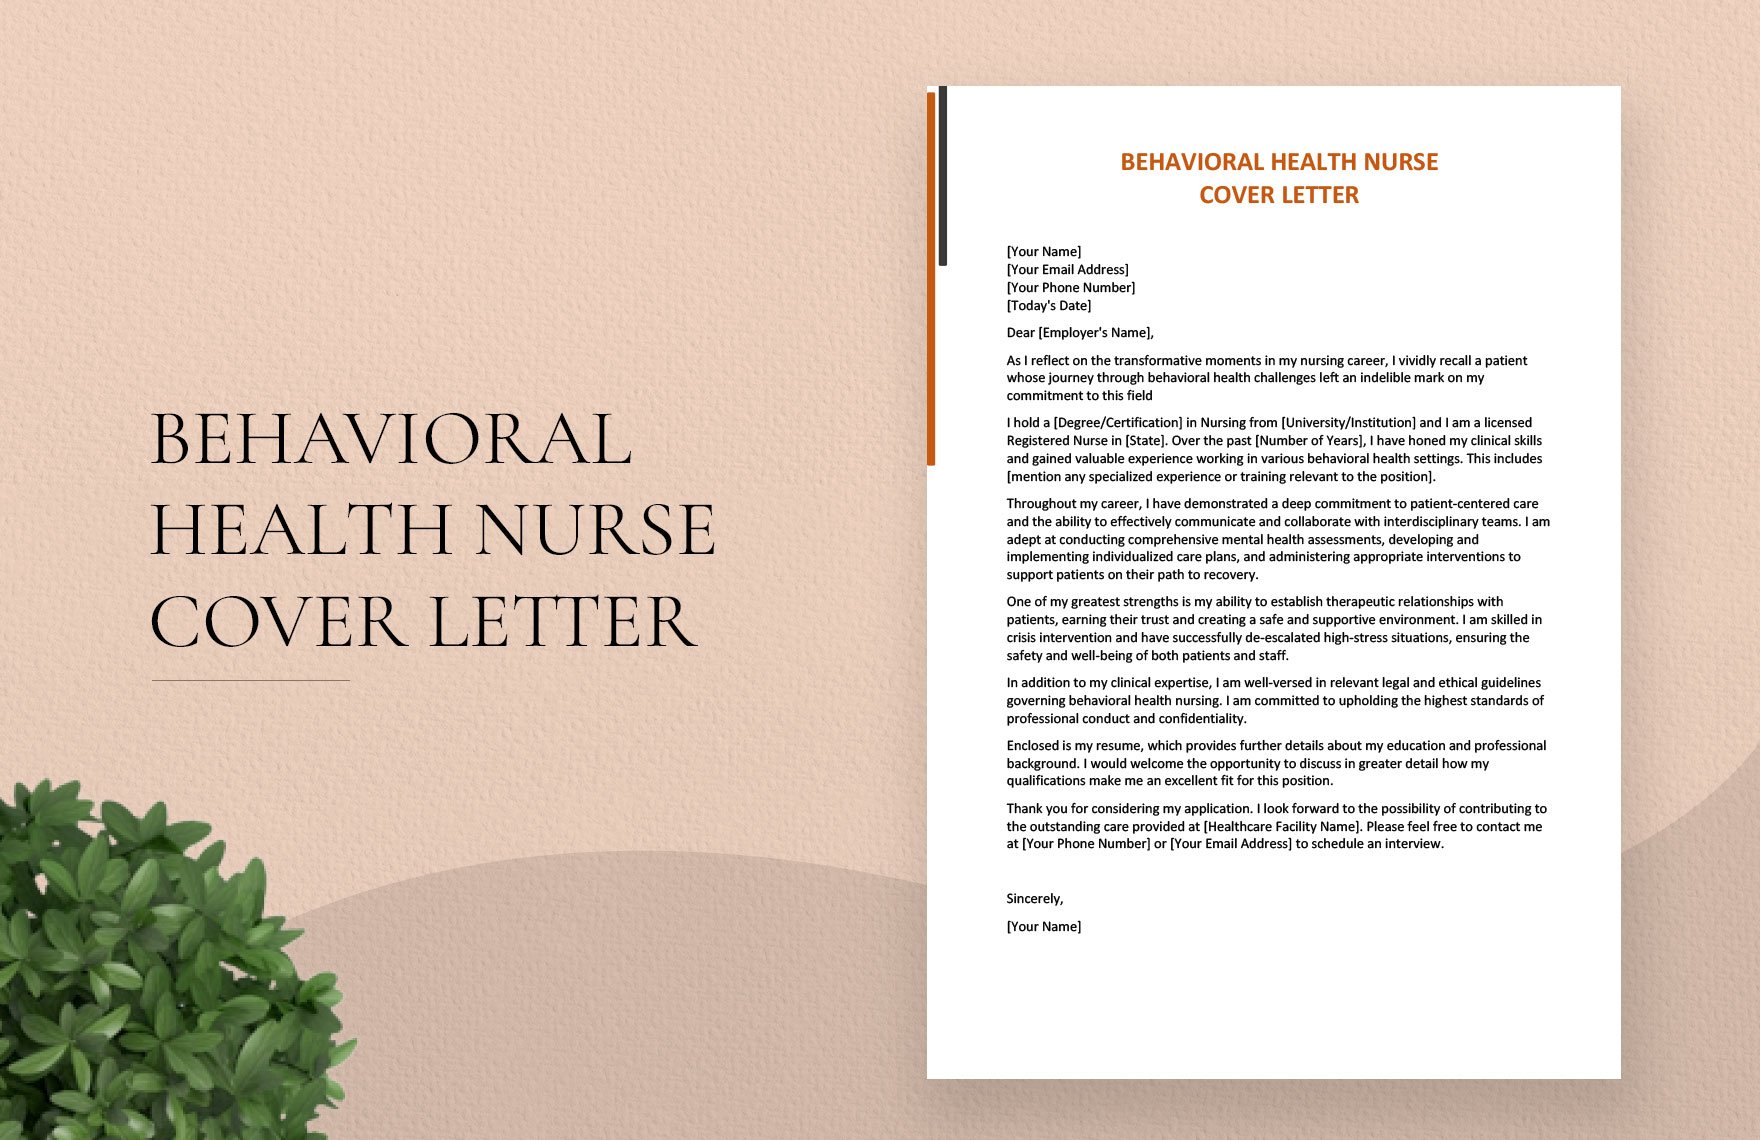 Behavioral Health Nurse Cover Letter in Word, Google Docs